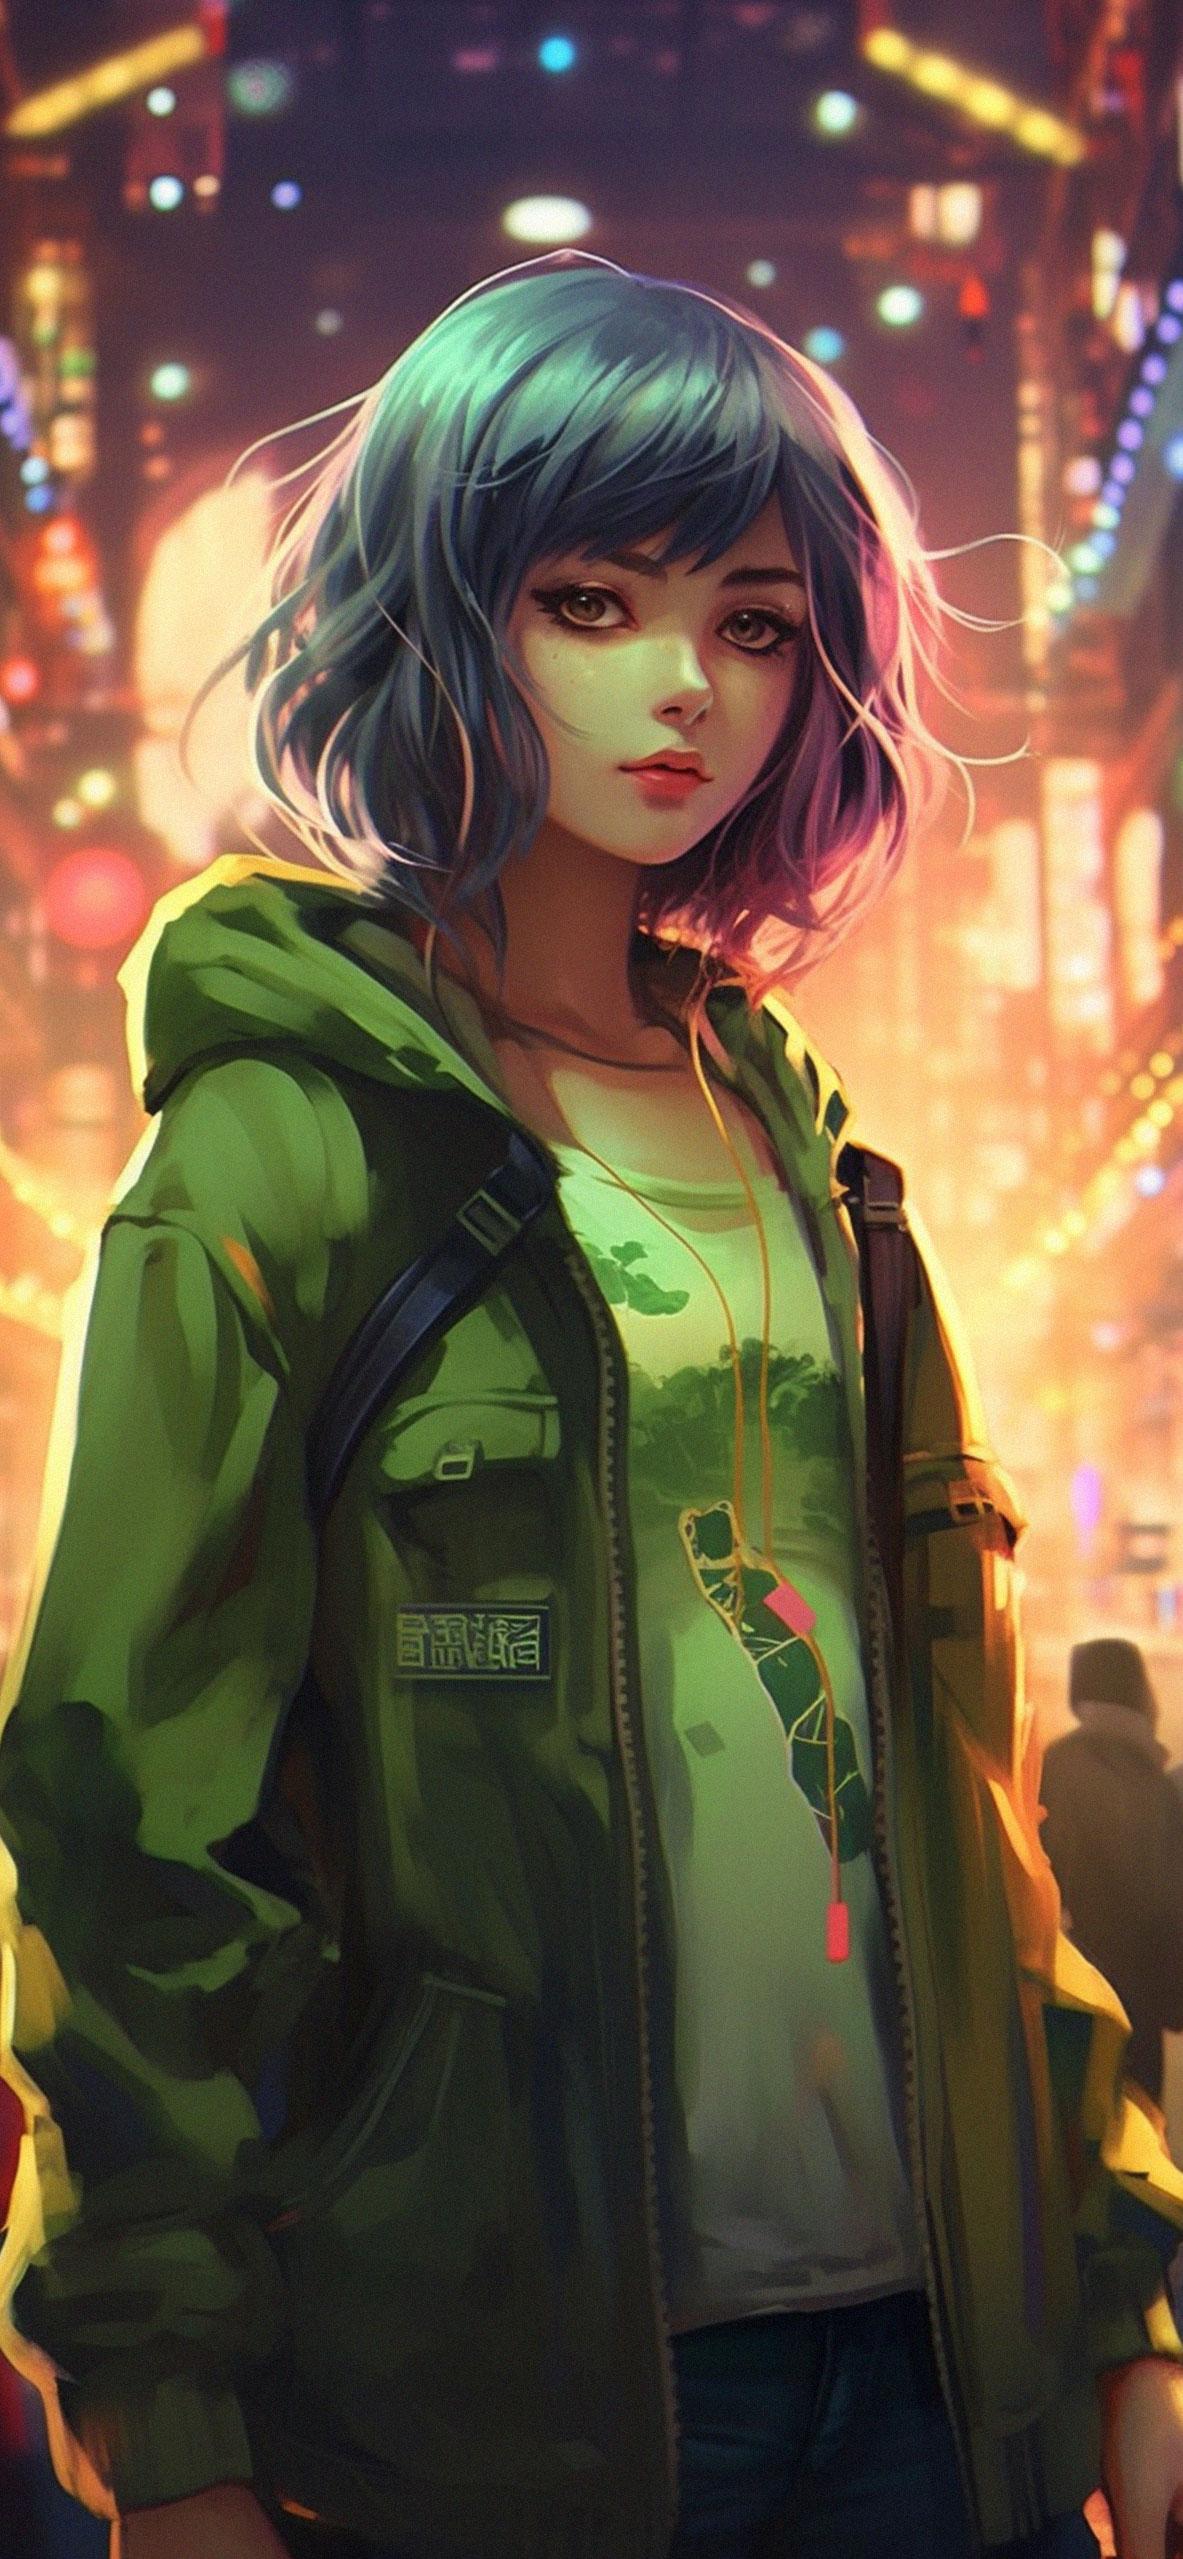 Anime Girl in a Green Jacket Wallpapers Anime Girl Wallpaper 4k